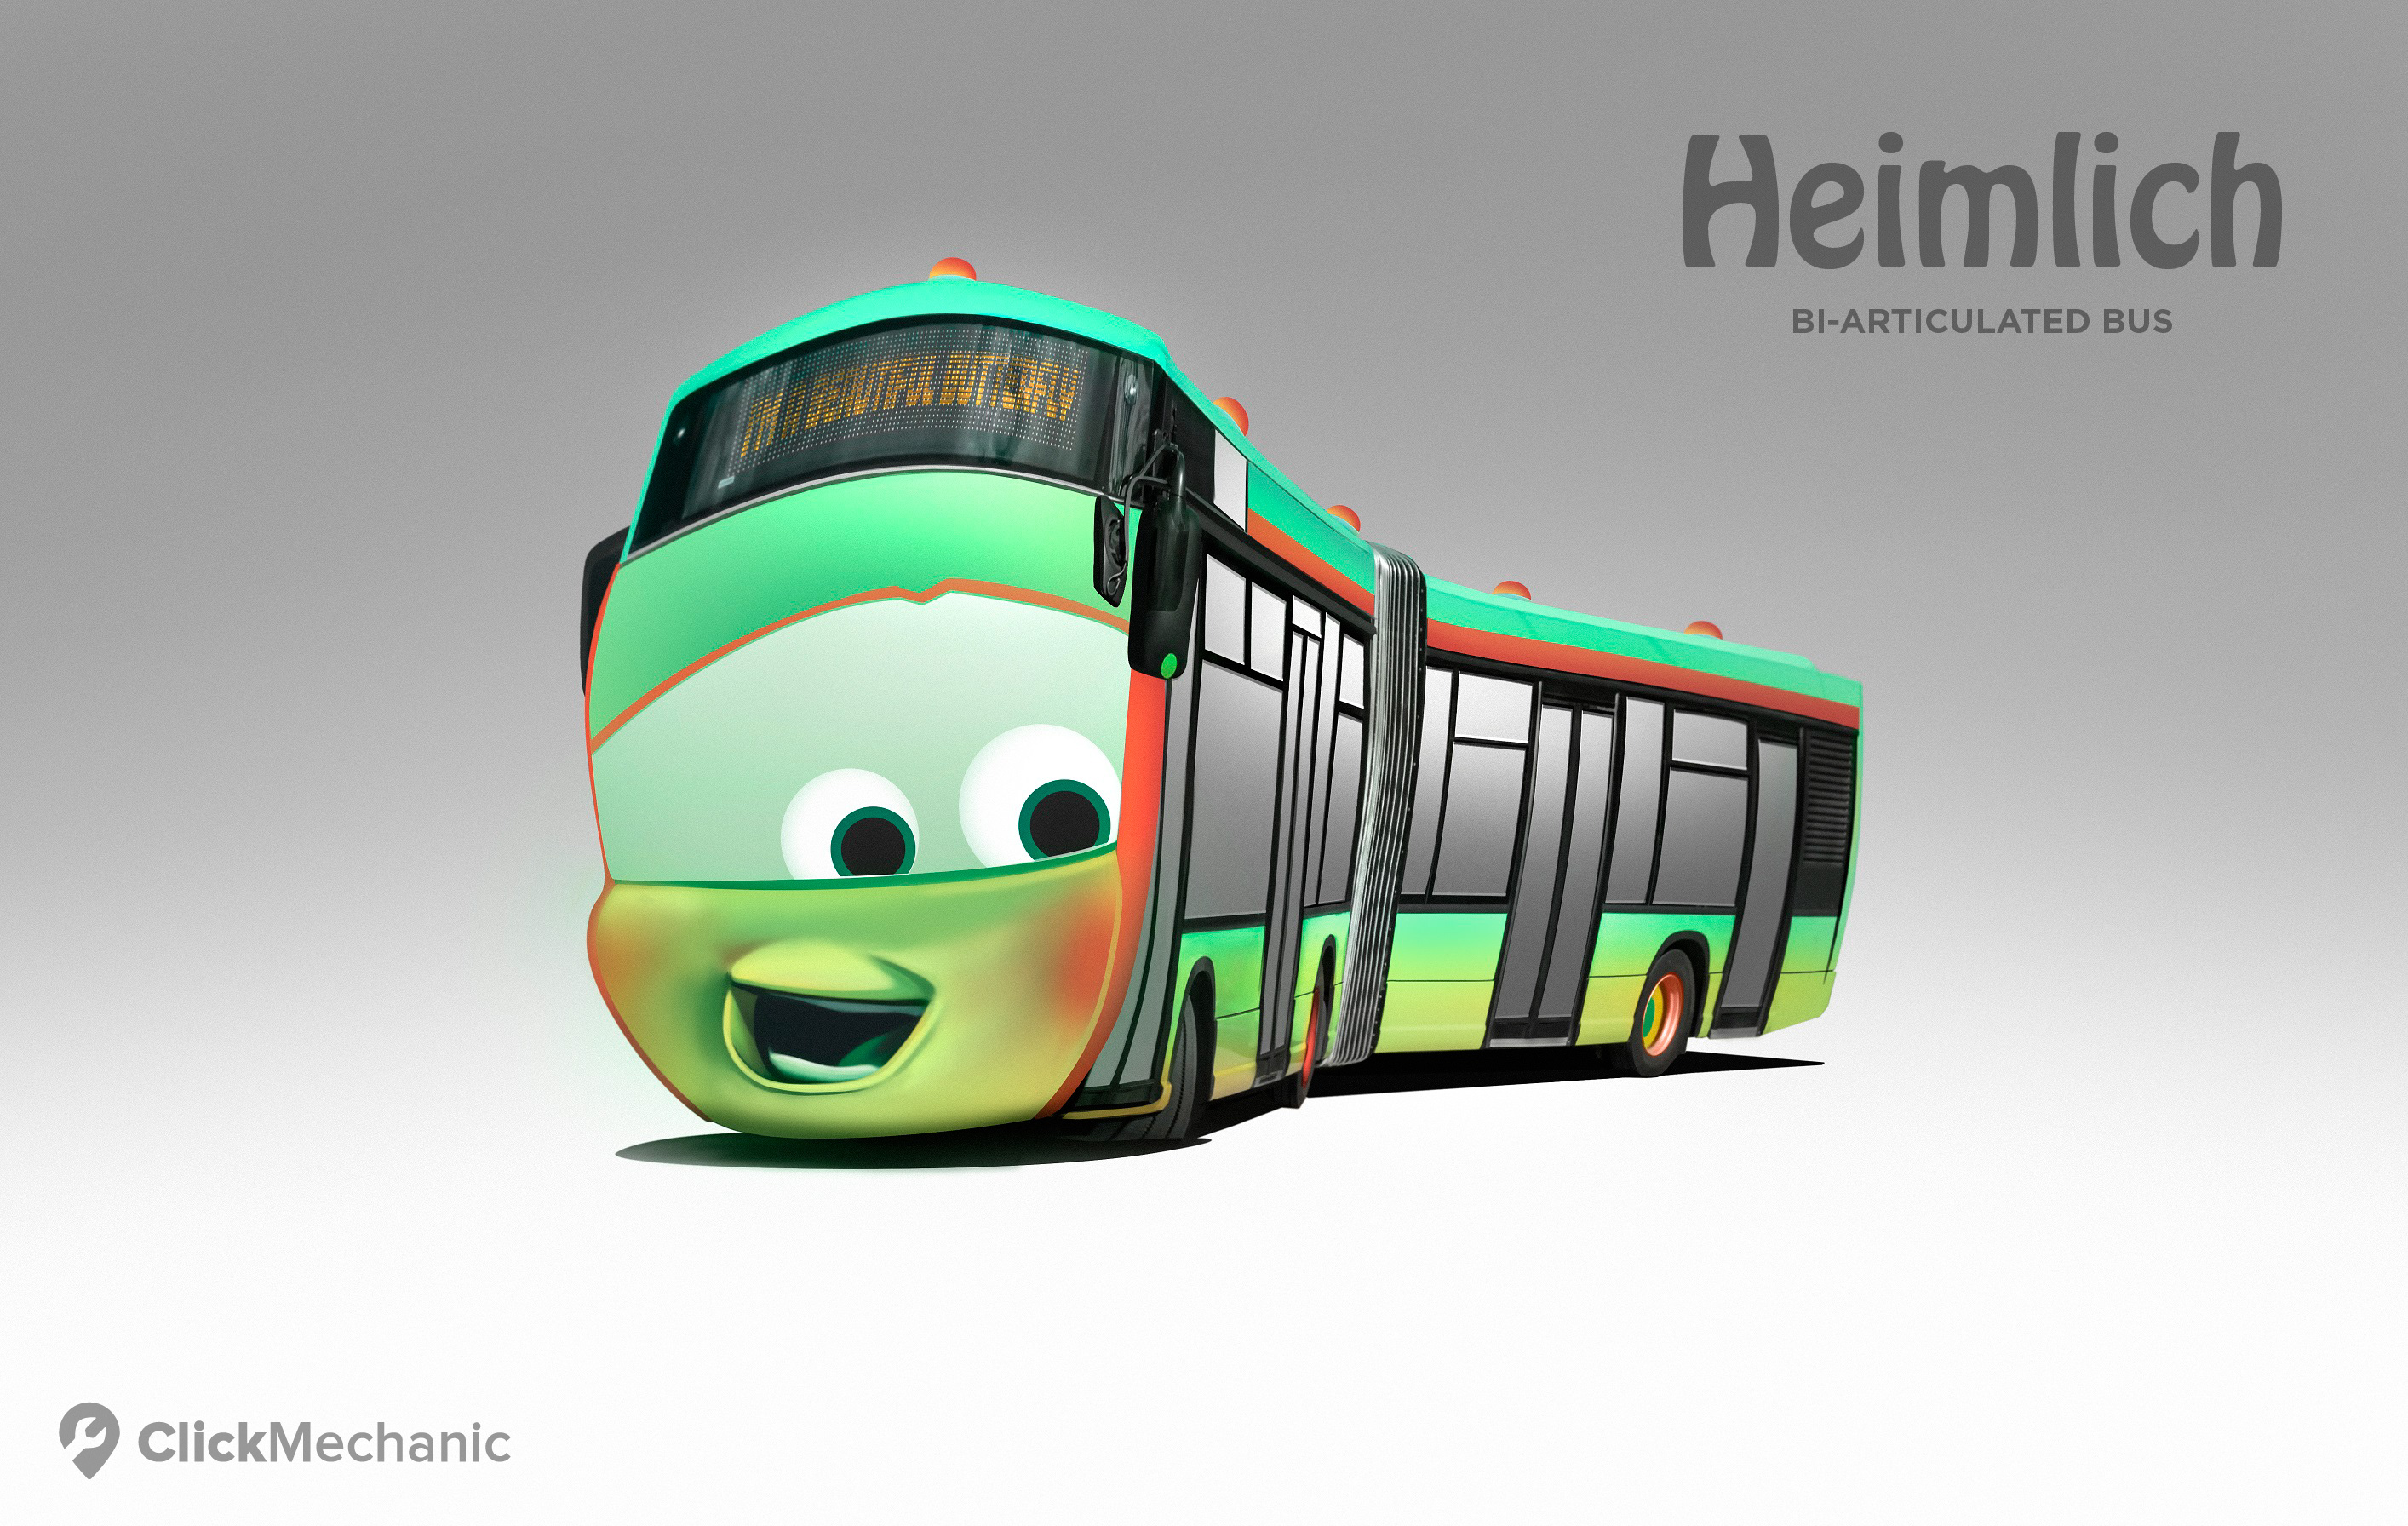 Heimlich: autobús semiarticulado